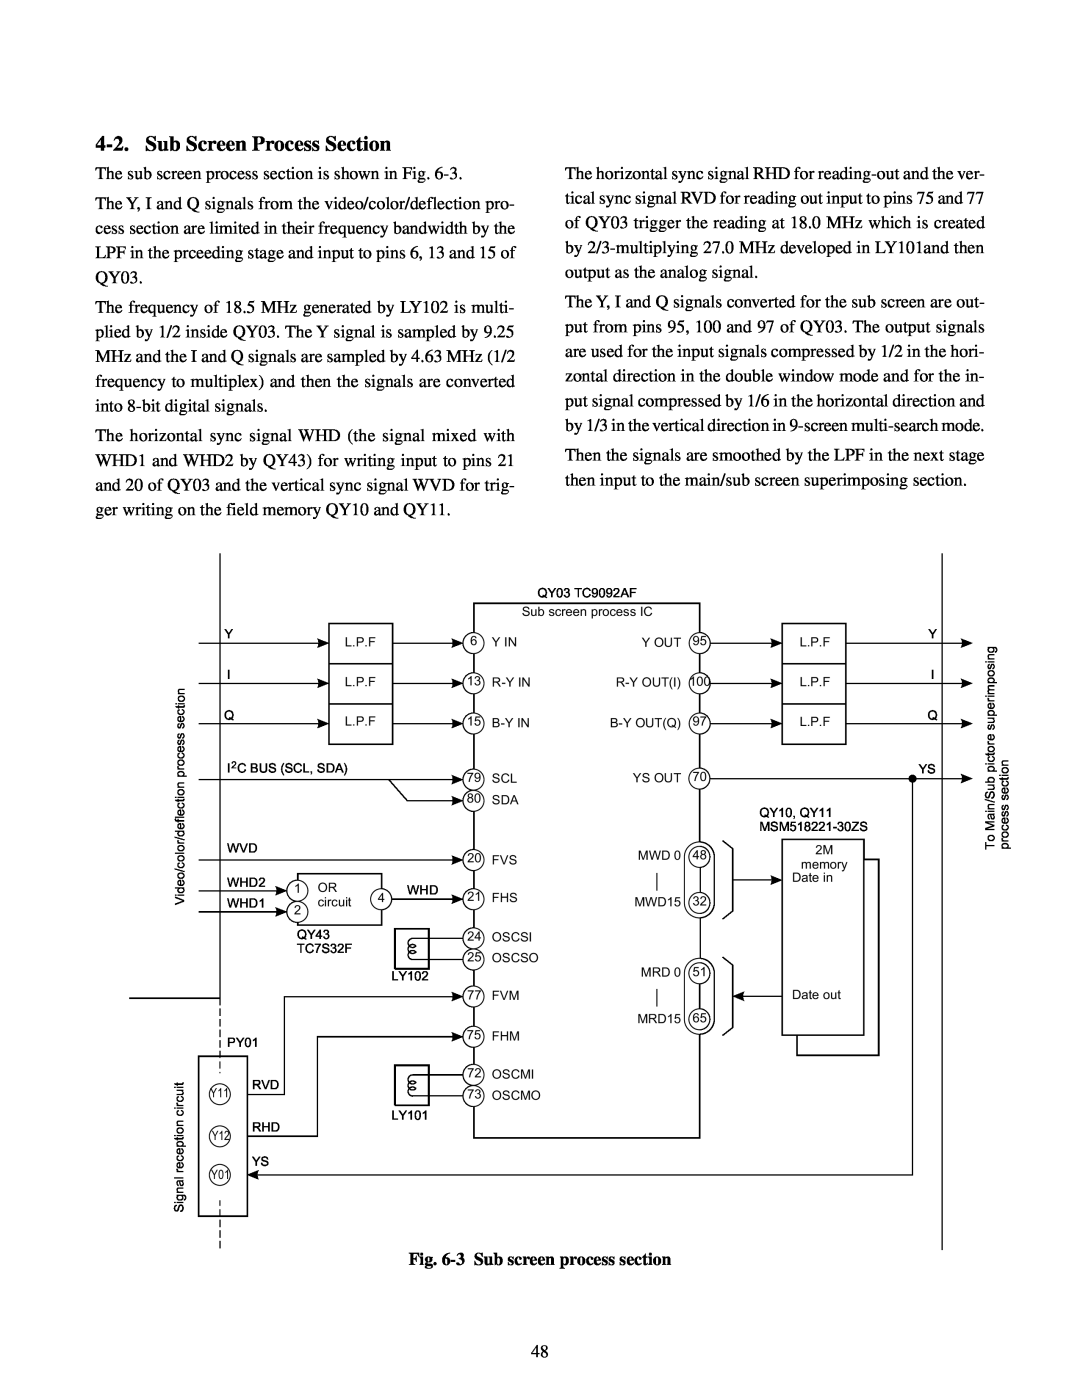 Toshiba TW40F80 manual Sub Screen Process Section, 3 Sub screen process section 